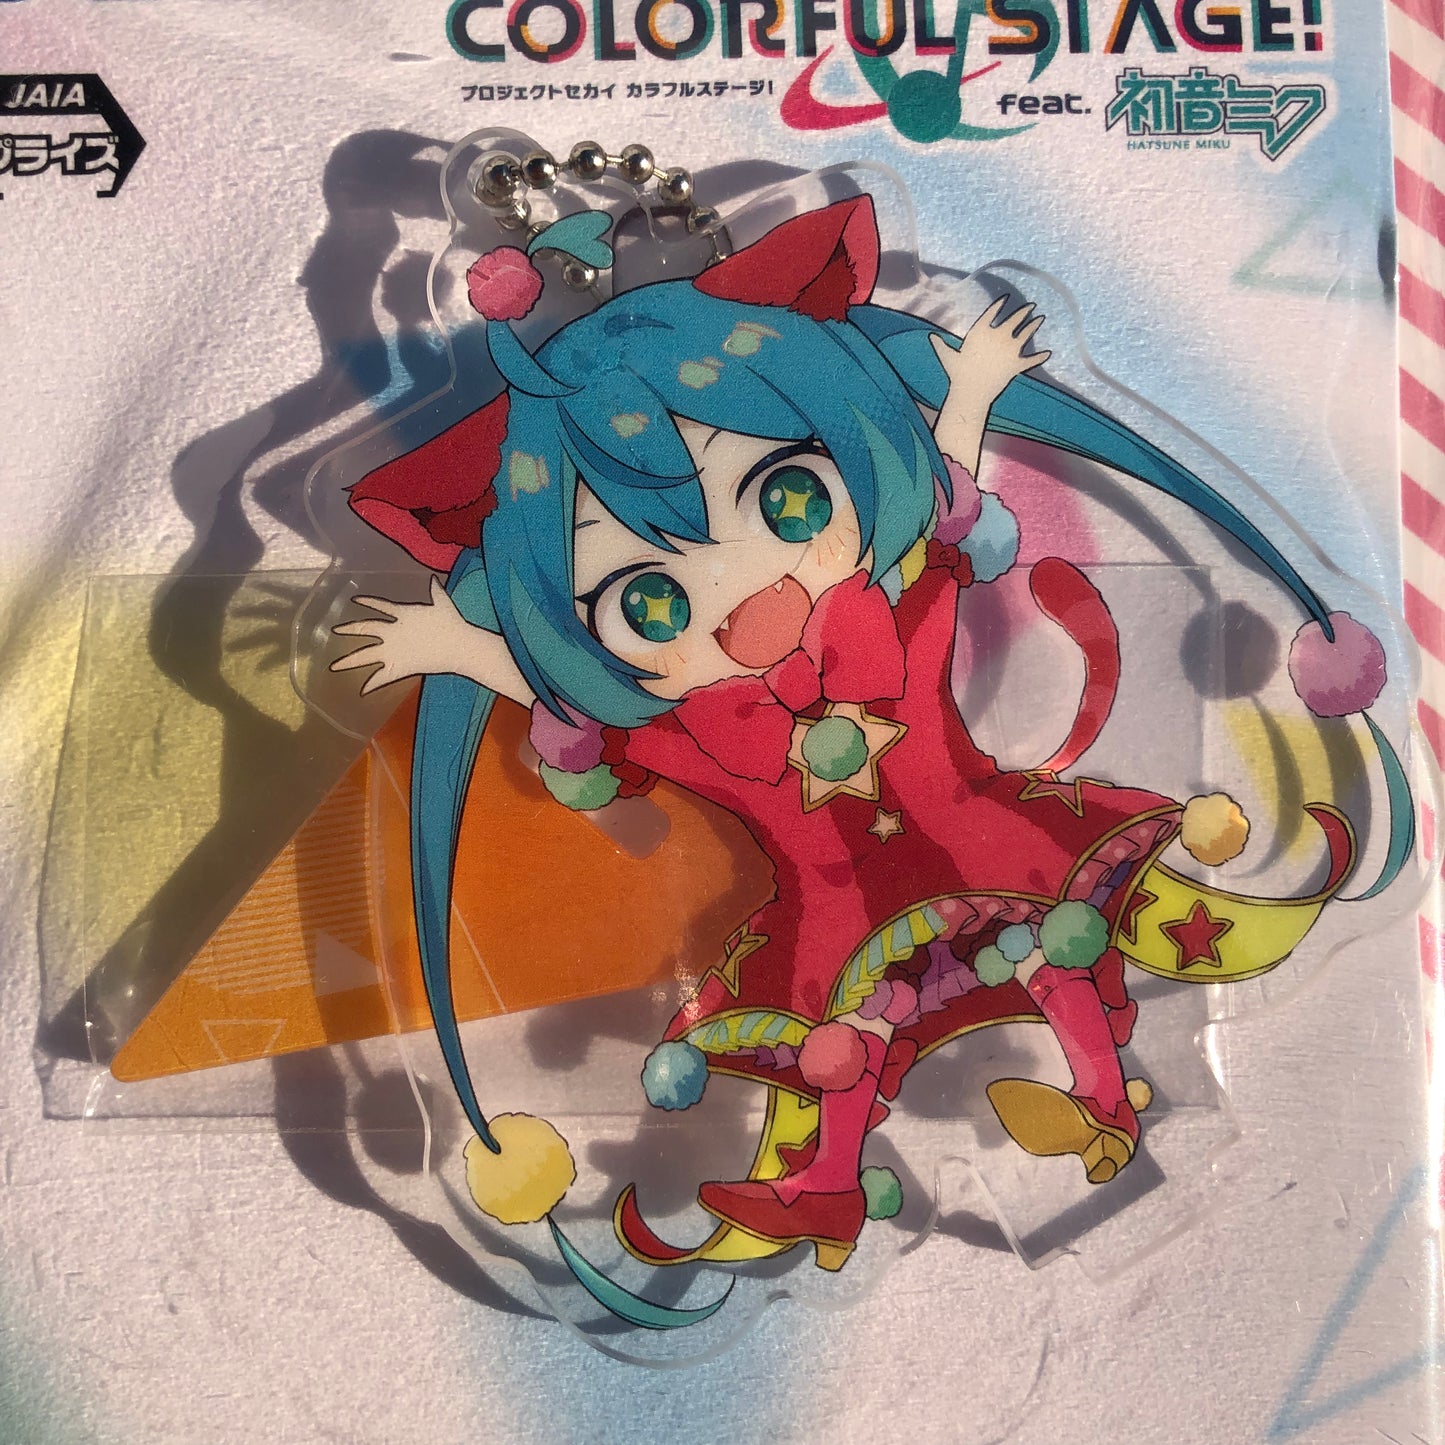 Llavero Stand Acrílico Hatsune Miku - Project Sekai Colorful Stage! ft. Hatsune Miku Vol.4